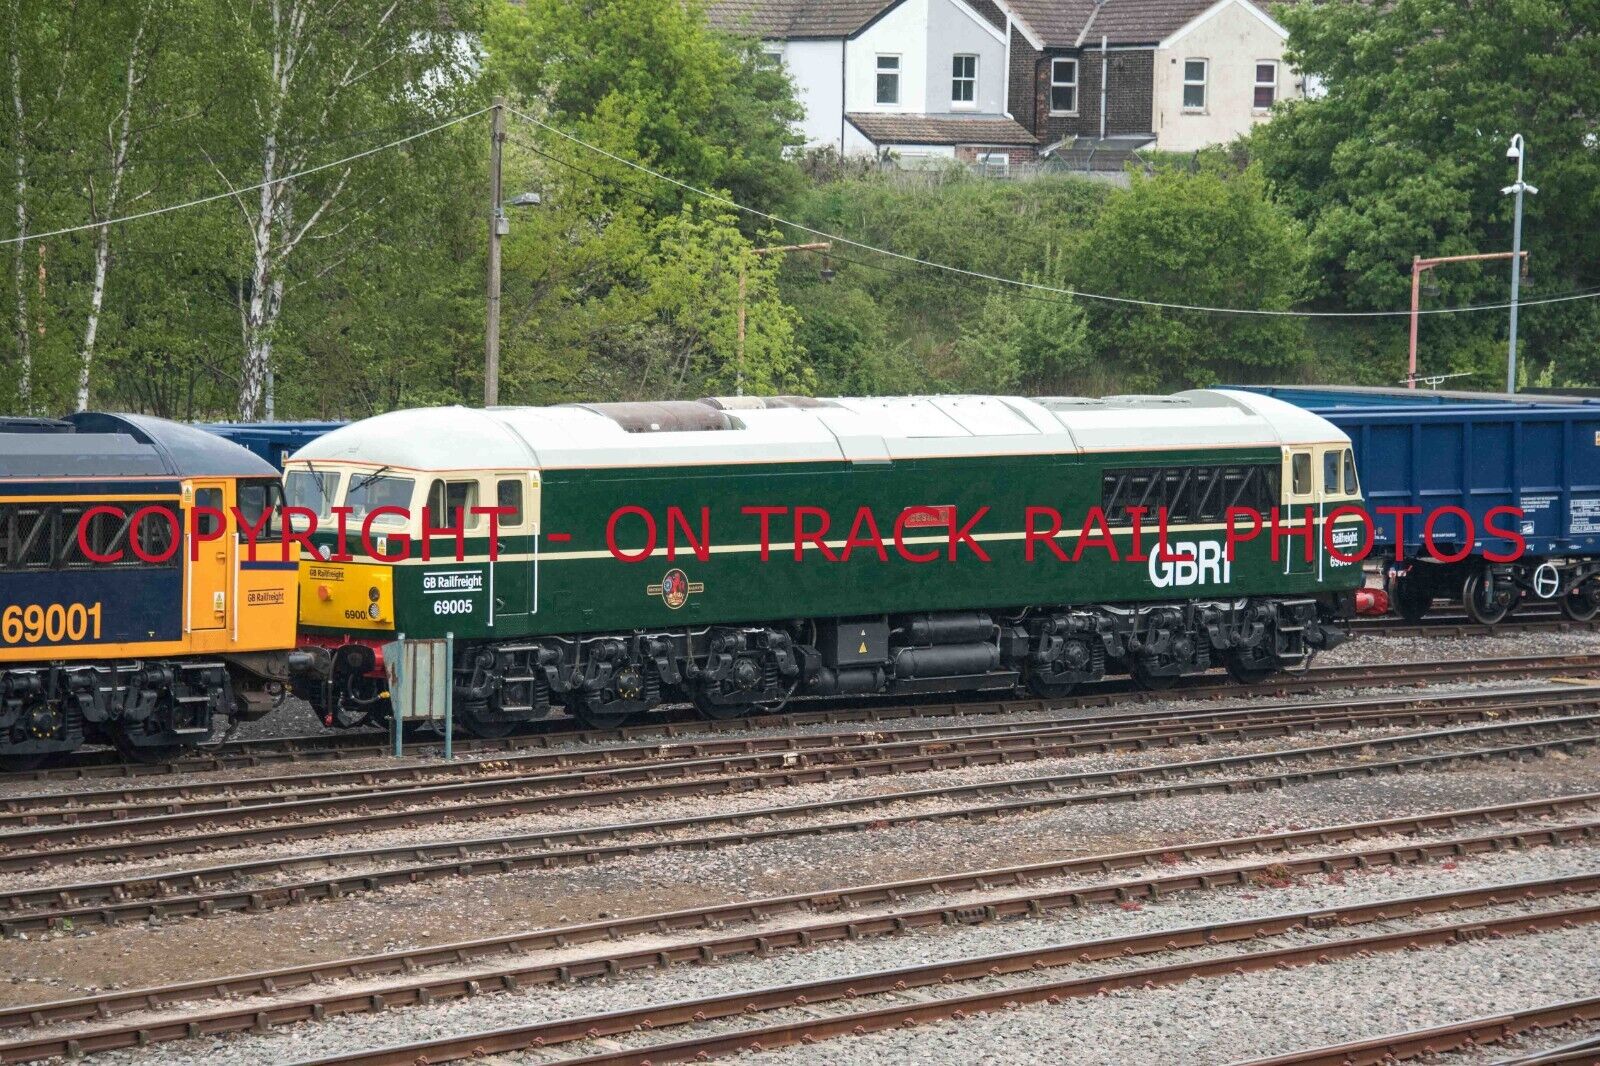 UK RAILWAY PHOTOGRAPH OF CLASS 69 LOCOMOTIVE 69005. RM69-06